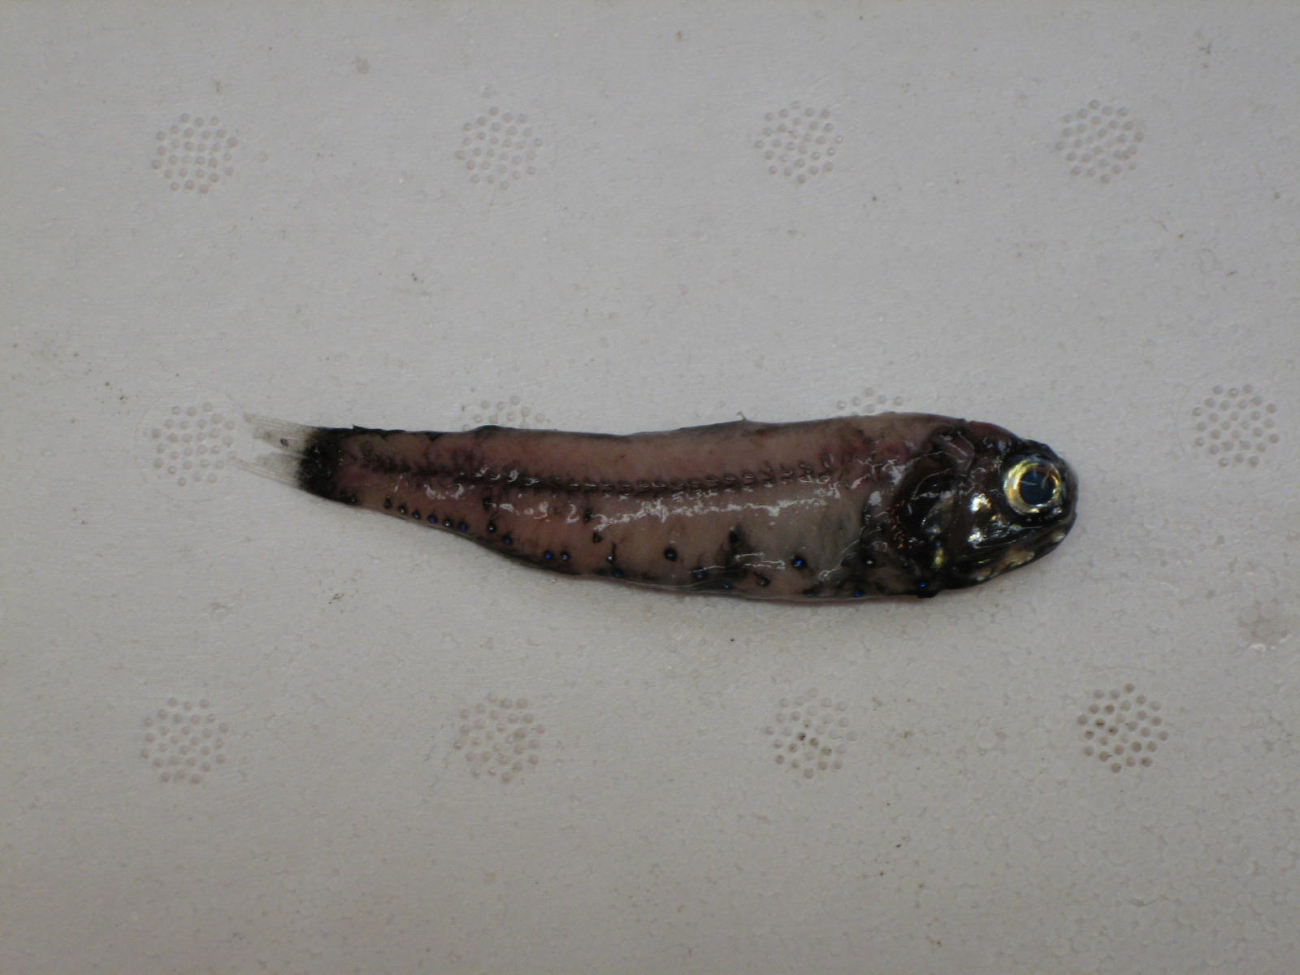 Lanternfish caught in midwater trawl